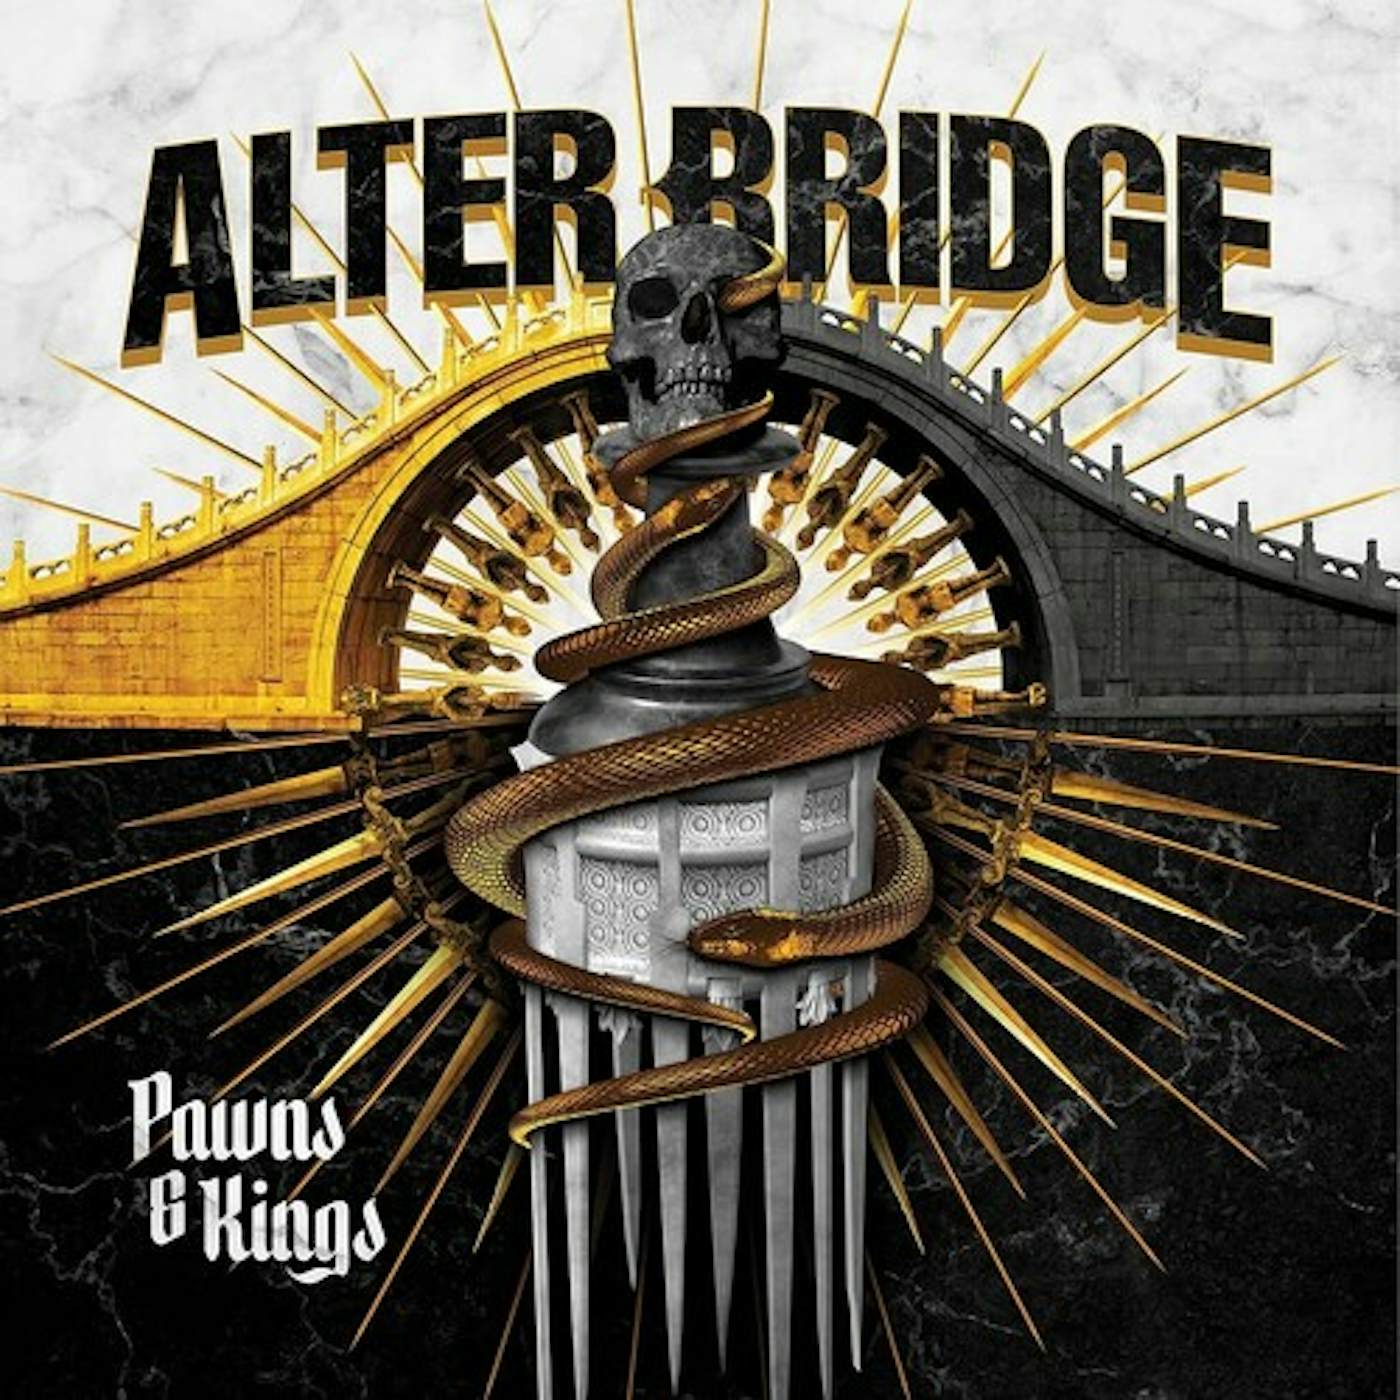 Alter Bridge Pawns & Kings vinyl record